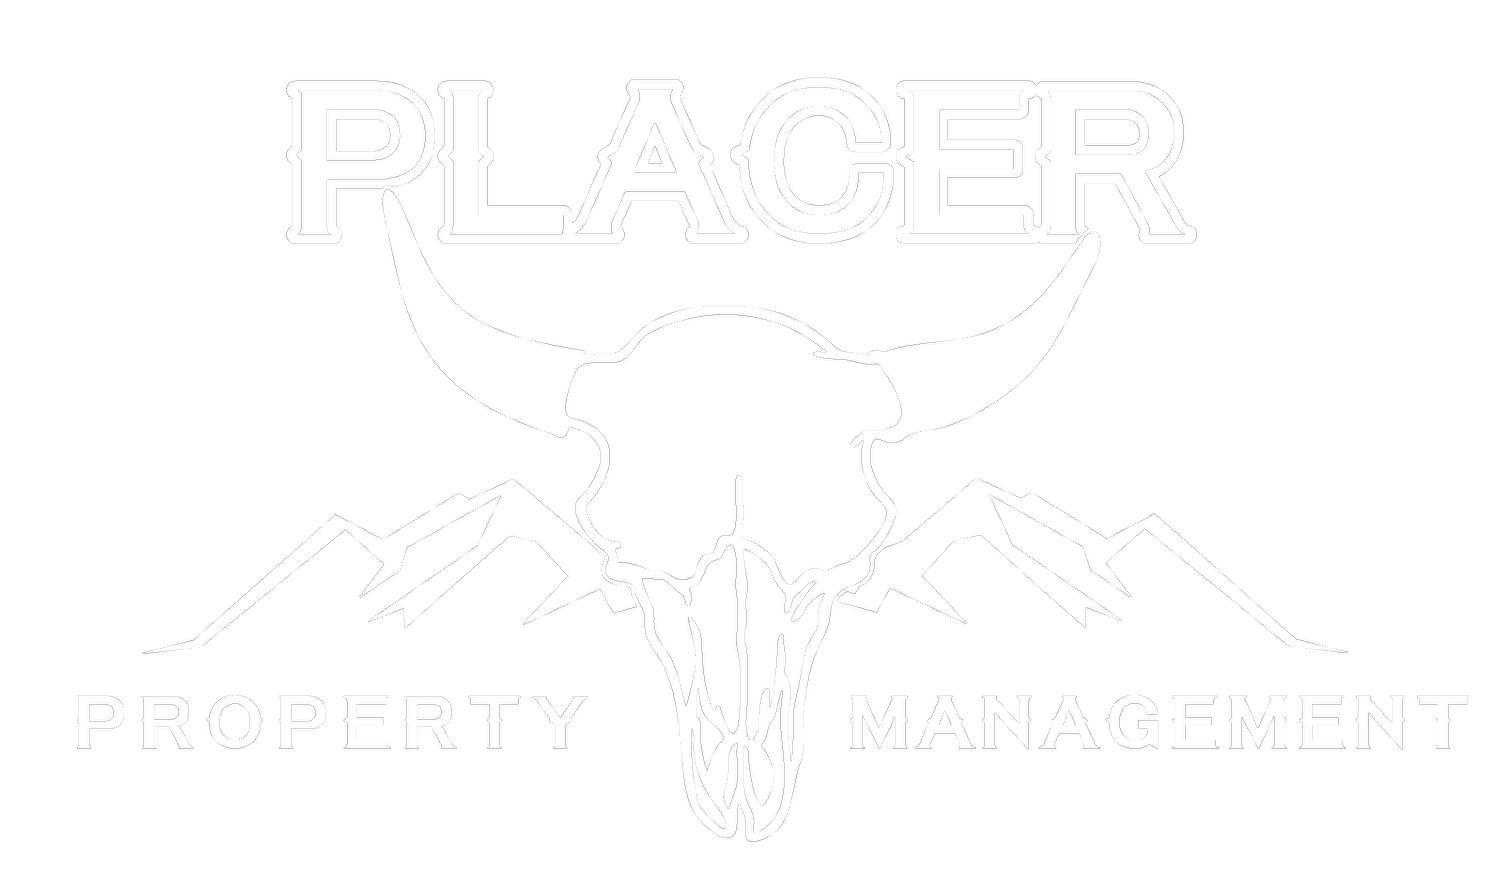 Placer Property Management | Park County Colorado Rental Property Management Company